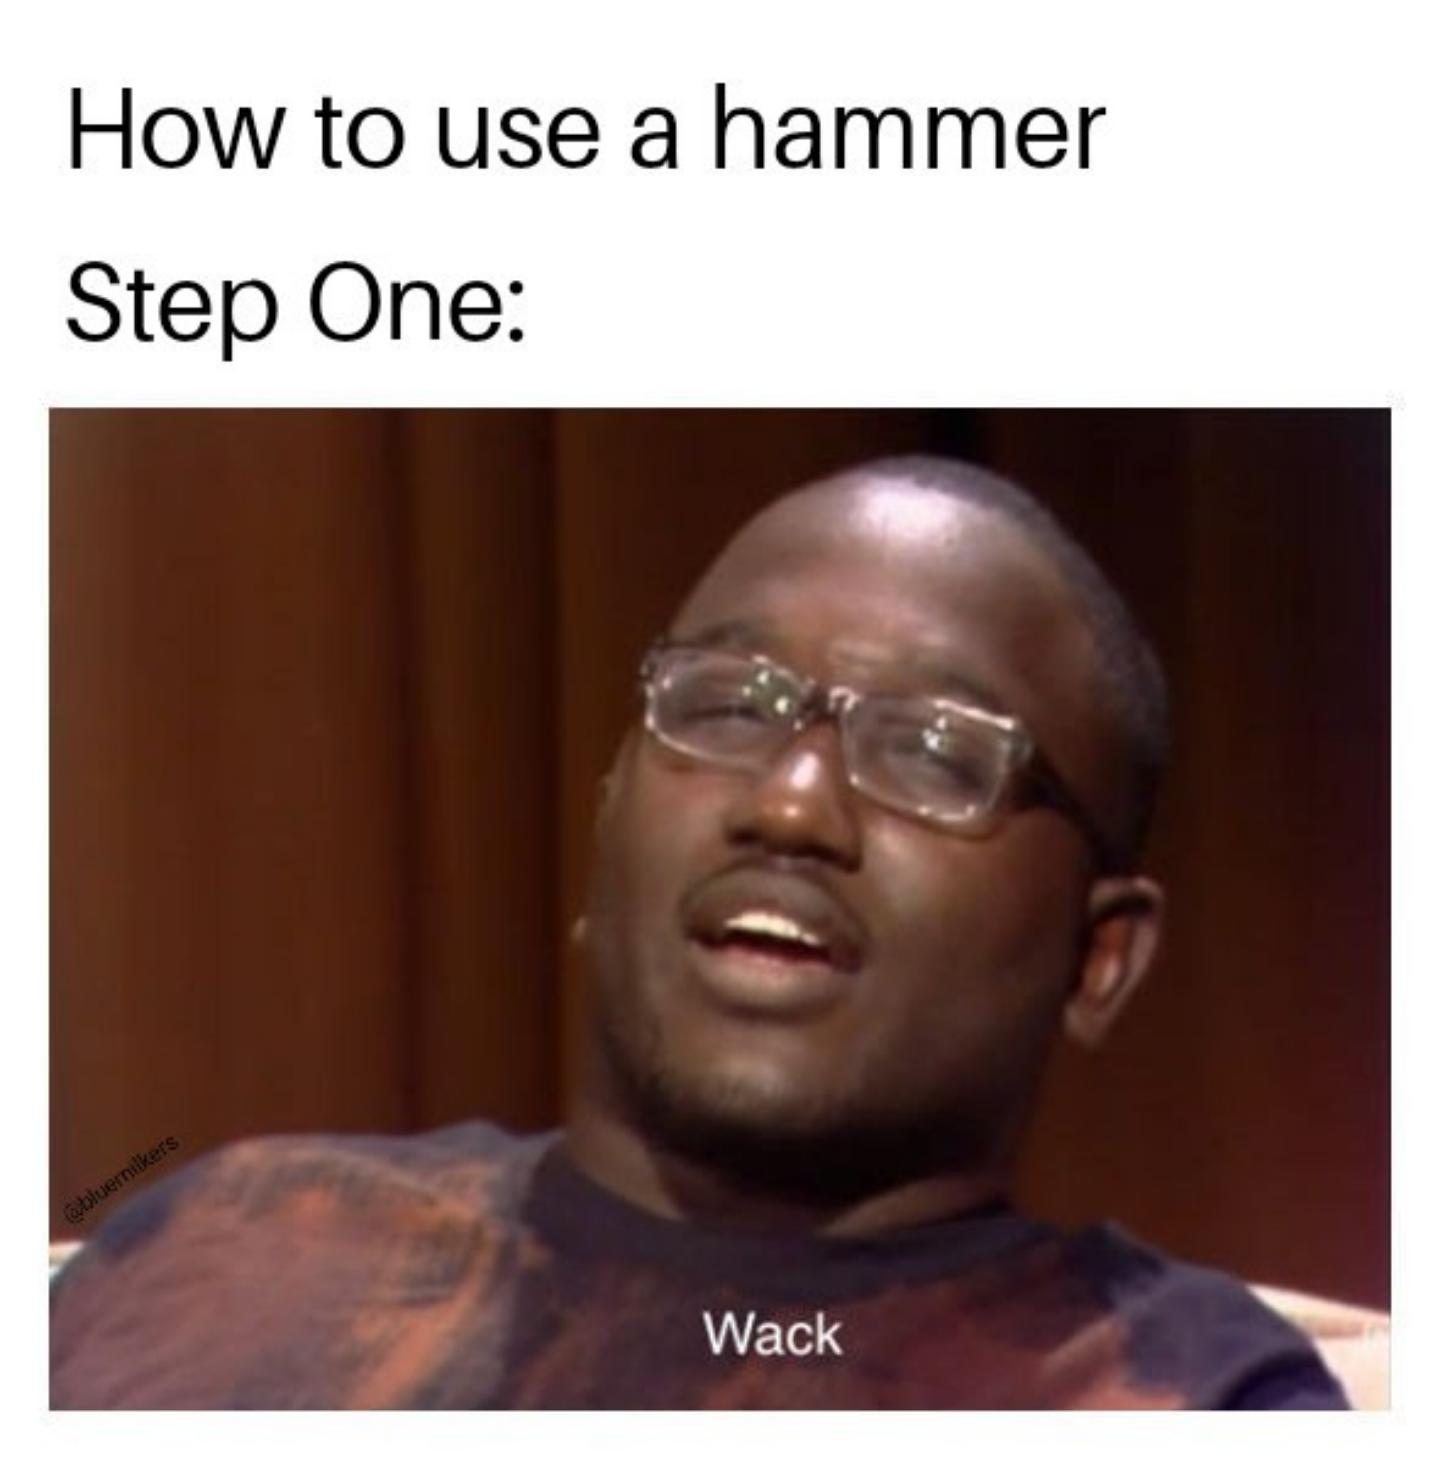 dank memes - funny memes - hannibal buress meme - How to use a hammer Step One Wack